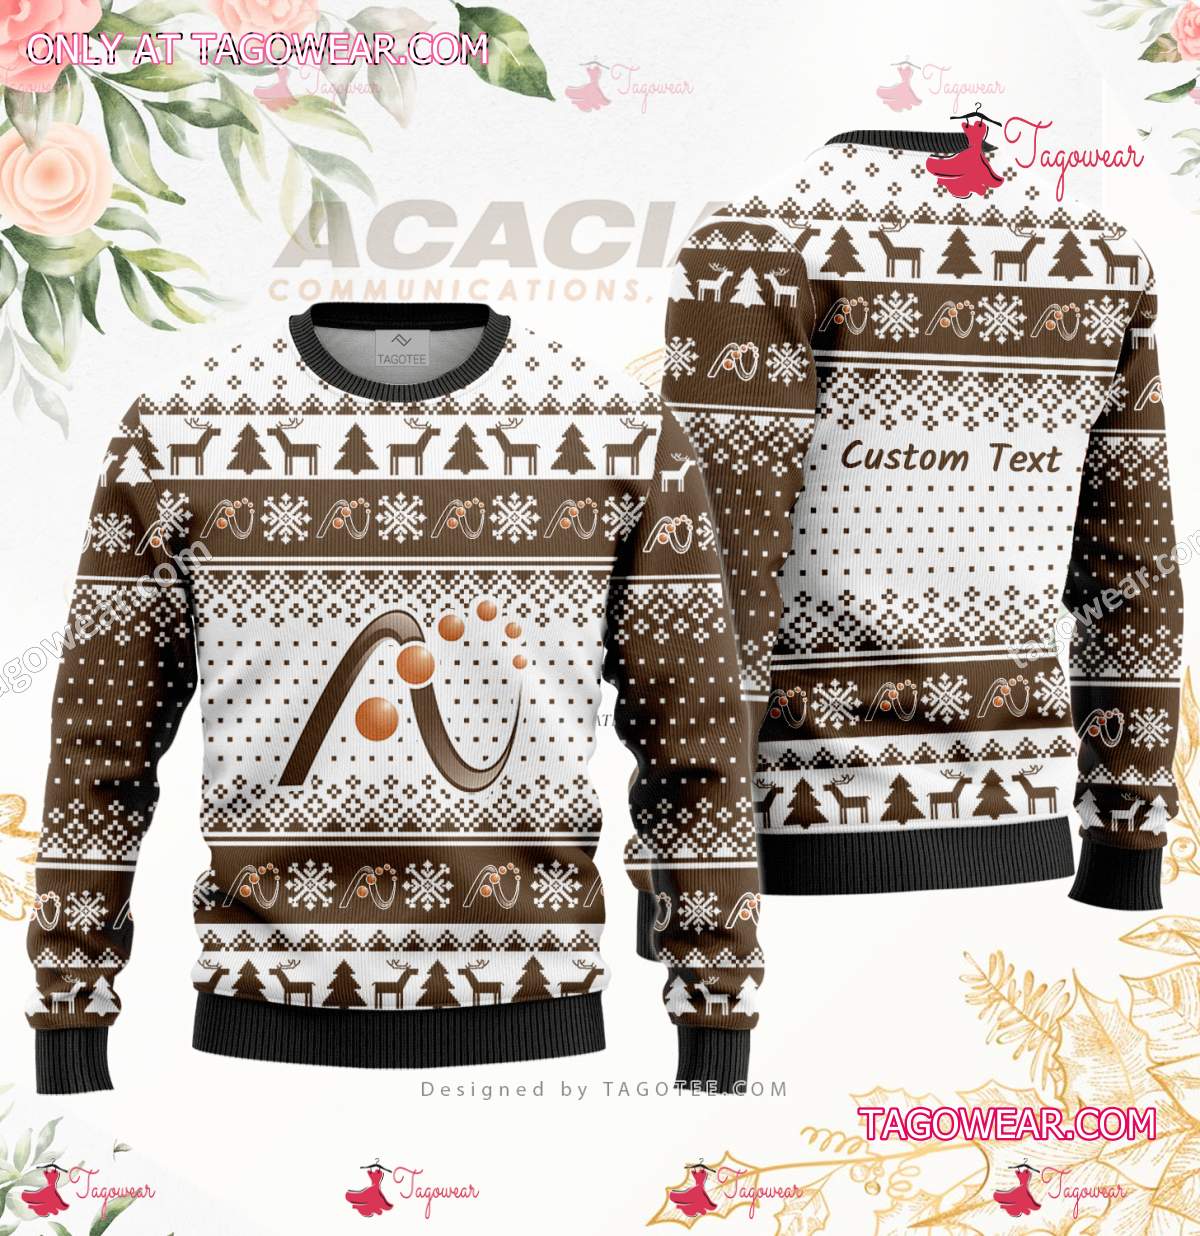 Acacia Communications, Inc. Ugly Christmas Sweater